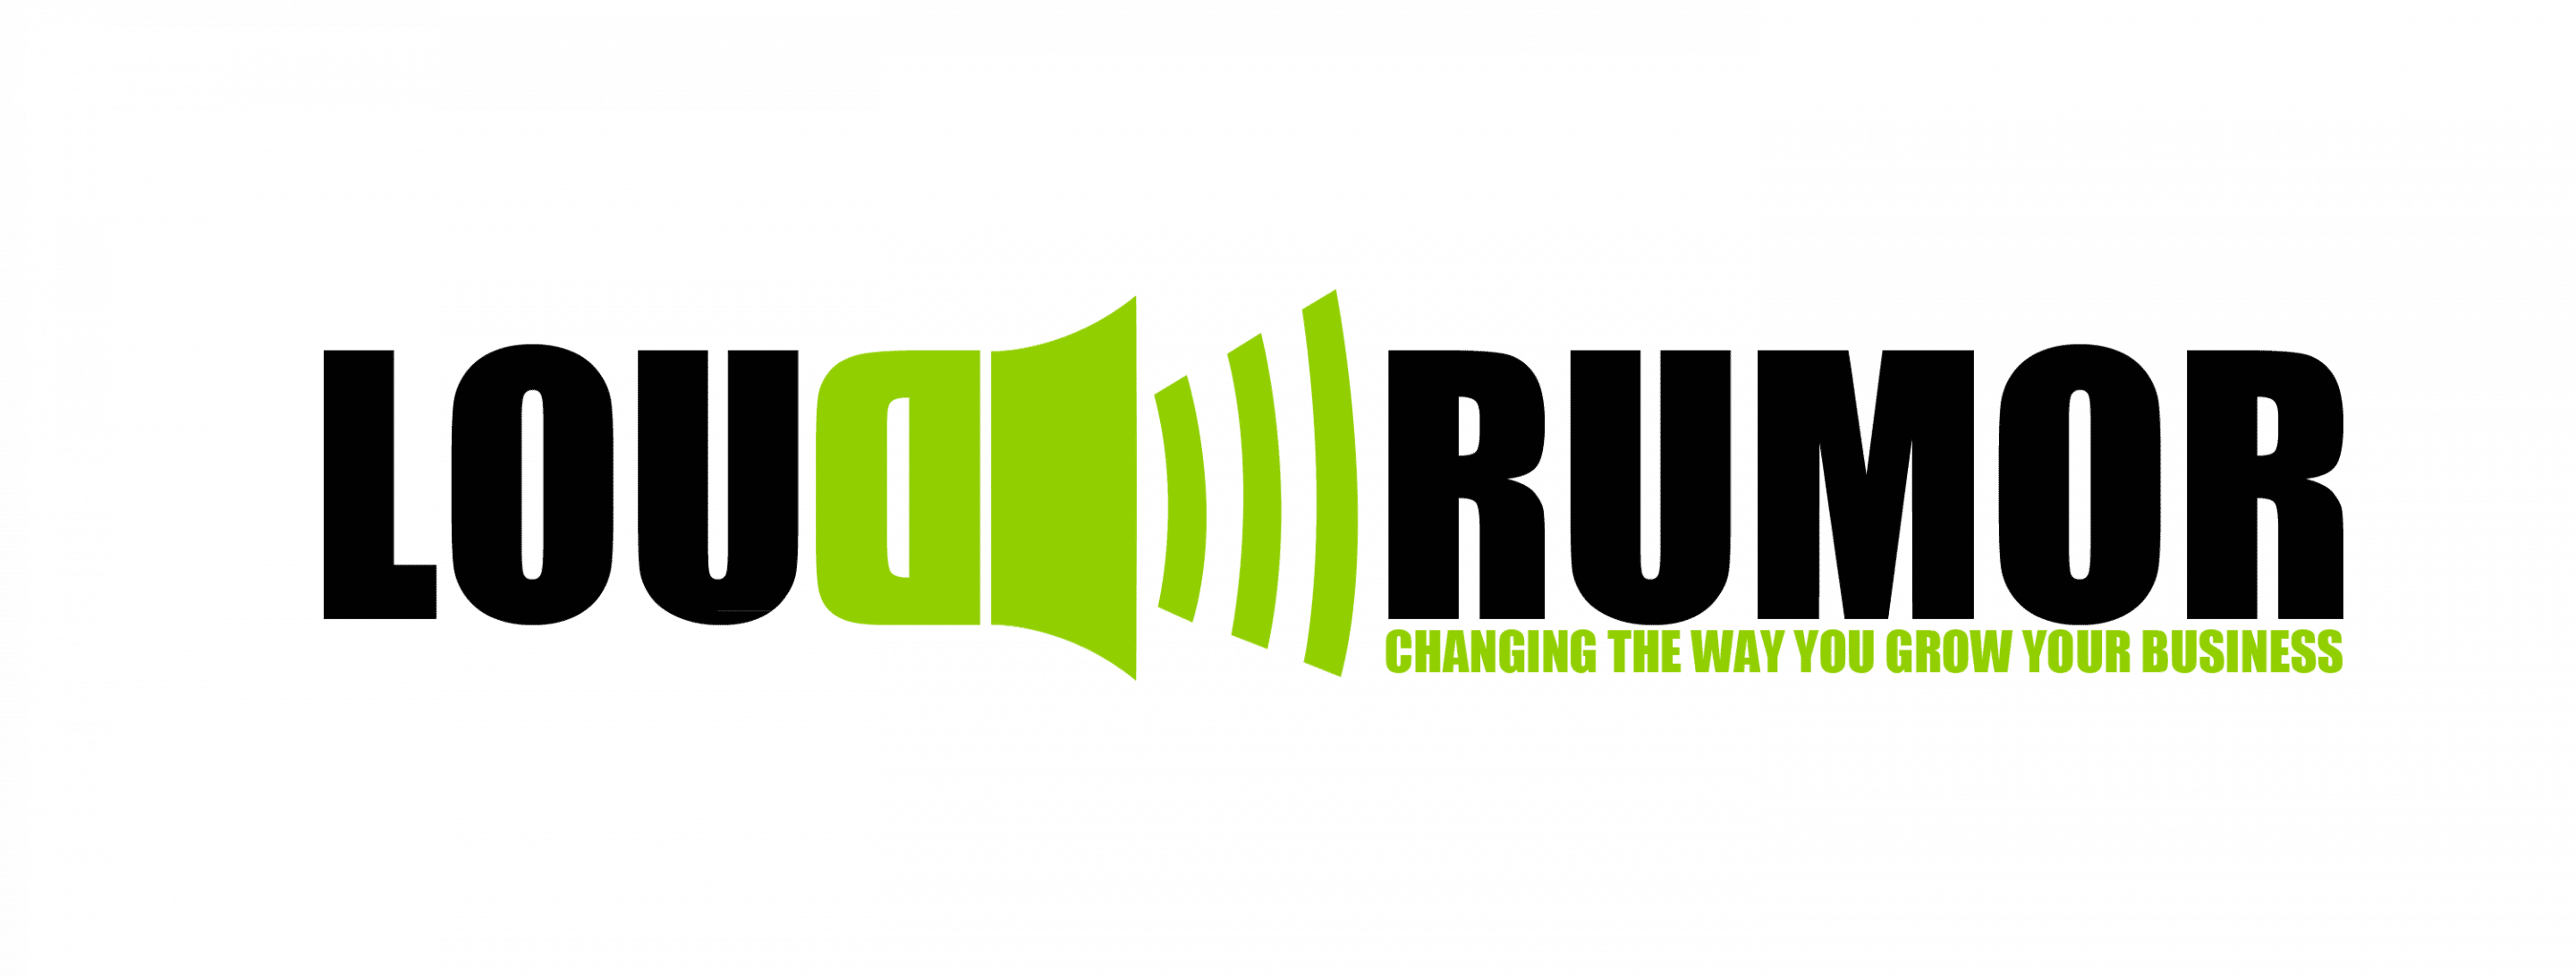 The Loud Rumor logo